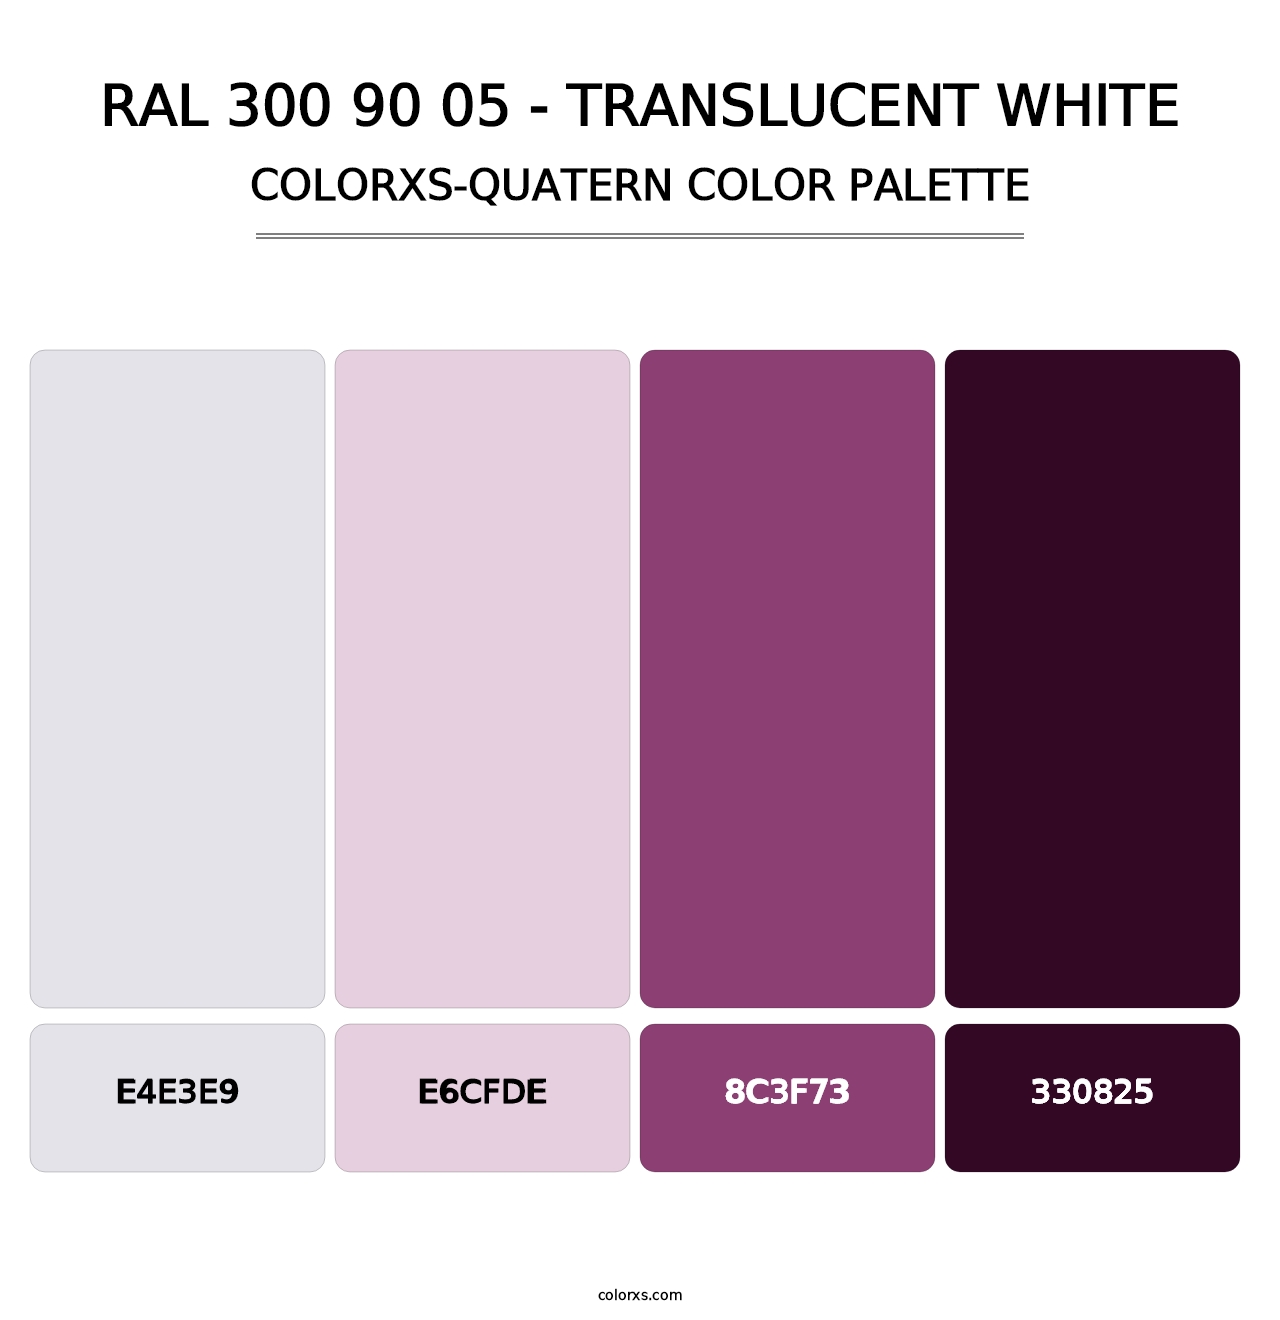 RAL 300 90 05 - Translucent White - Colorxs Quatern Palette